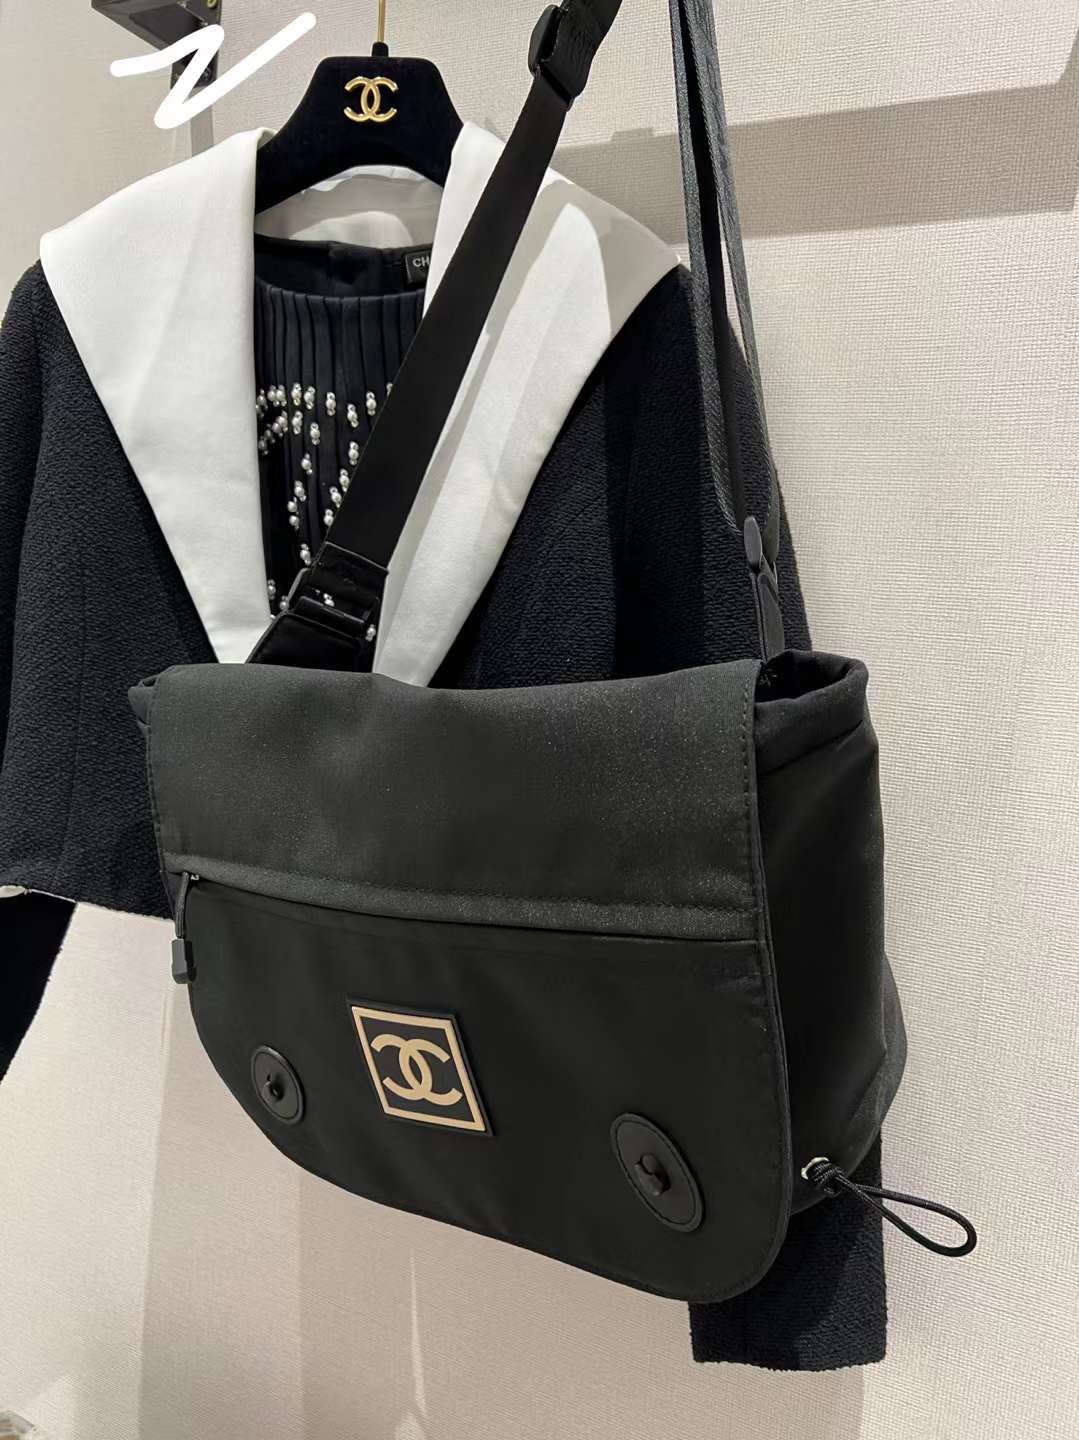 【P870】香奈儿包包价格 Chanel休闲运动风尼龙材质斜挎包单肩包 黑色